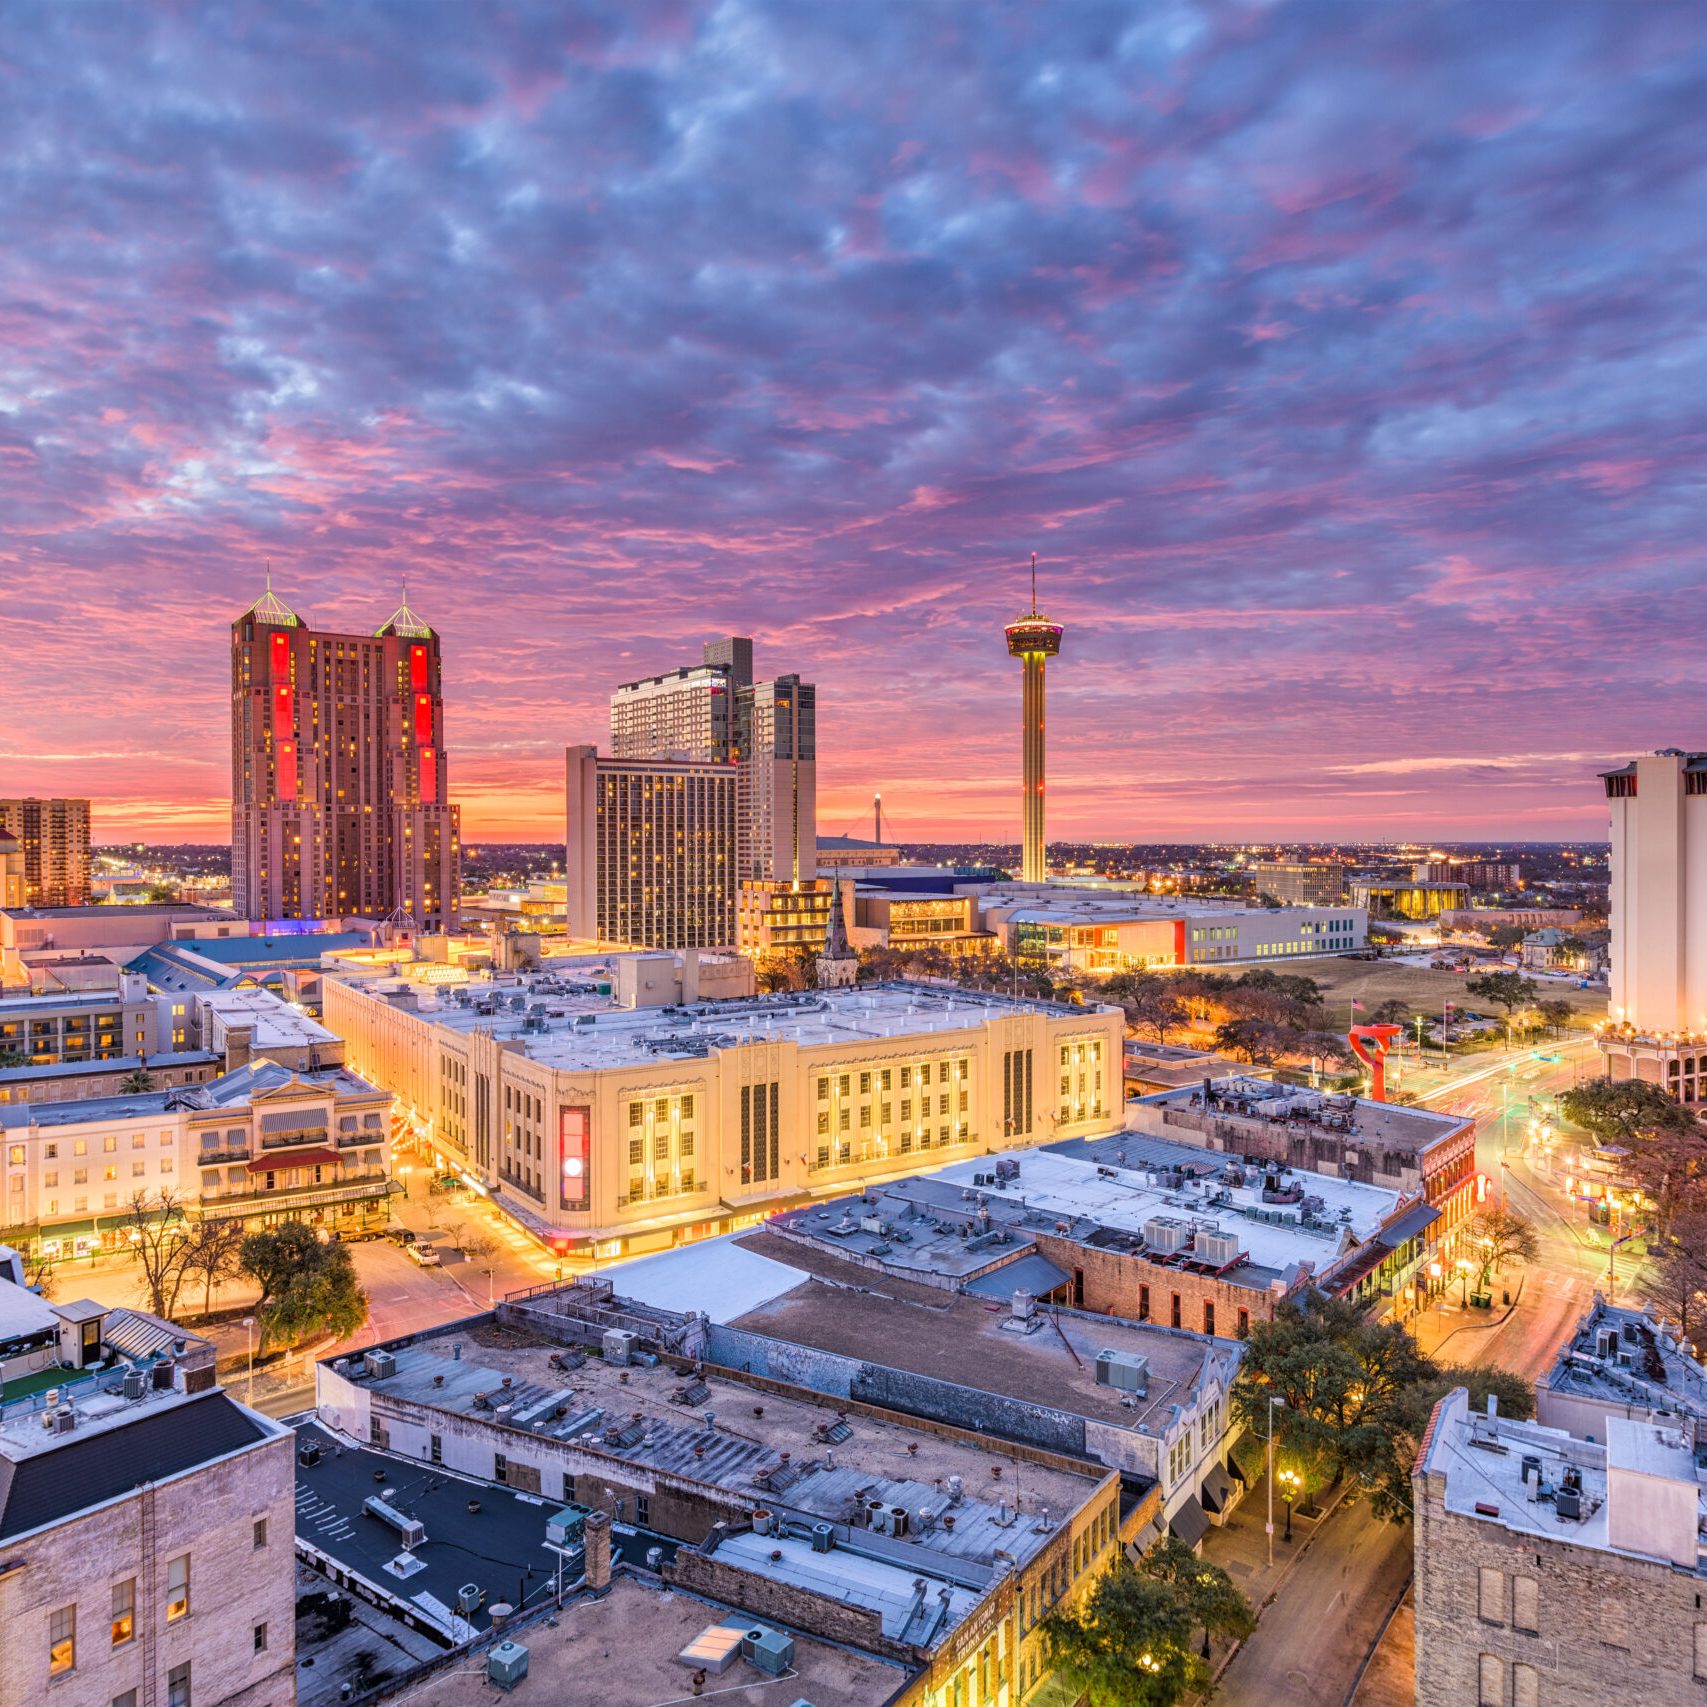 San Antonio, Texas, USA downtown city skyline at dusk.